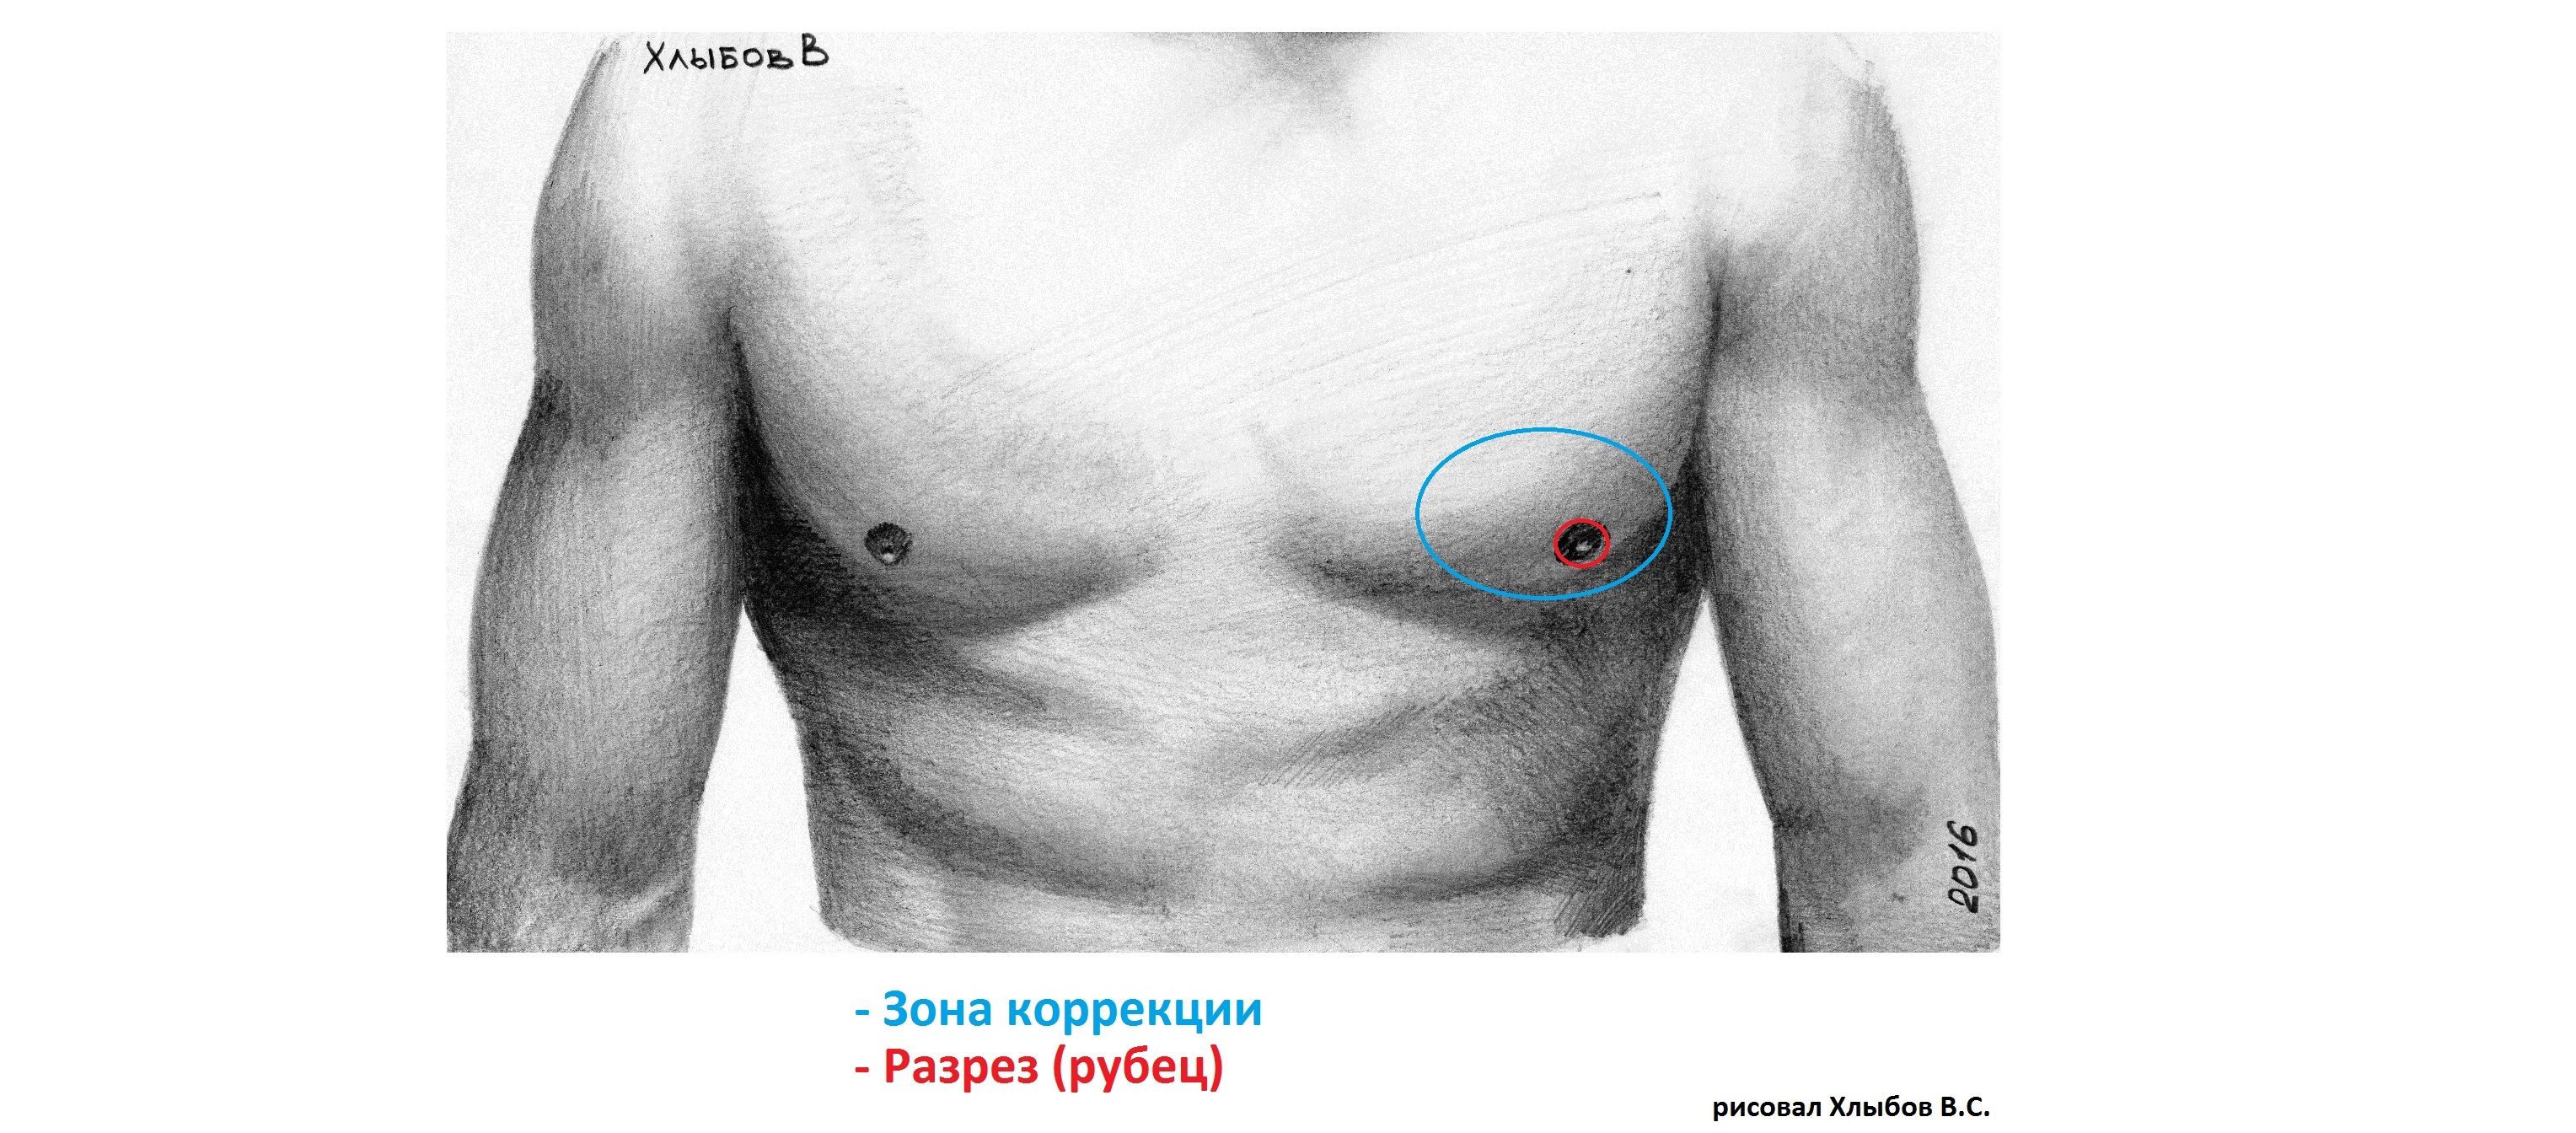 опухоль на левой груди у мужчин фото 63